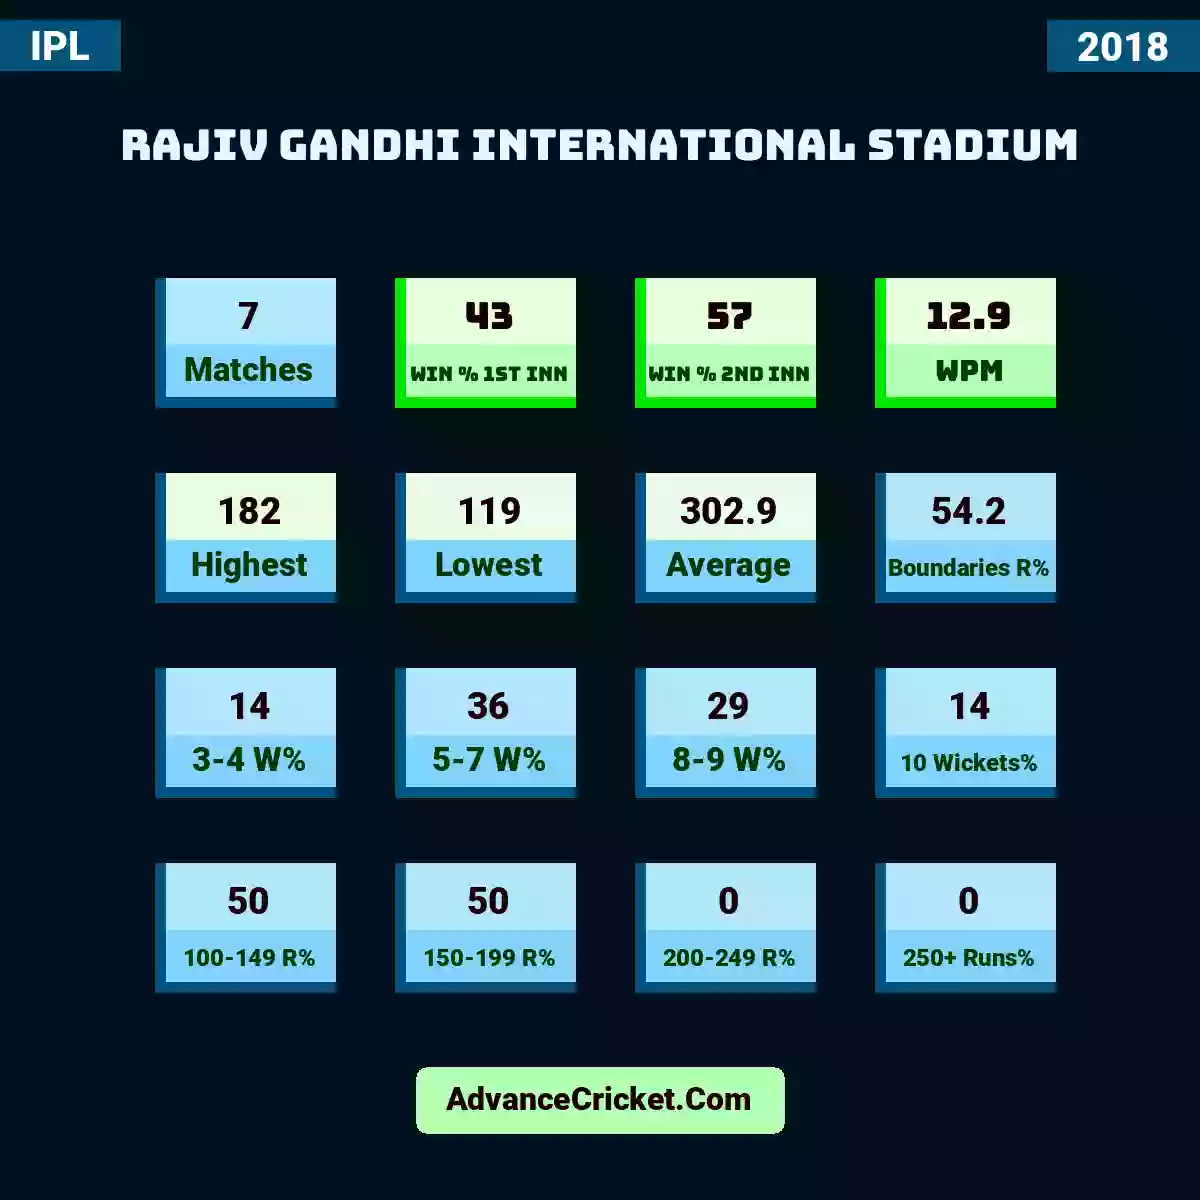 Image showing Rajiv Gandhi International Stadium IPL 2018 with Matches: 7, Win % 1st Inn: 43, Win % 2nd Inn: 57, WPM: 12.9, Highest: 182, Lowest: 119, Average: 302.9, Boundaries R%: 54.2, 3-4 W%: 14, 5-7 W%: 36, 8-9 W%: 29, 10 Wickets%: 14, 100-149 R%: 50, 150-199 R%: 50, 200-249 R%: 0, 250+ Runs%: 